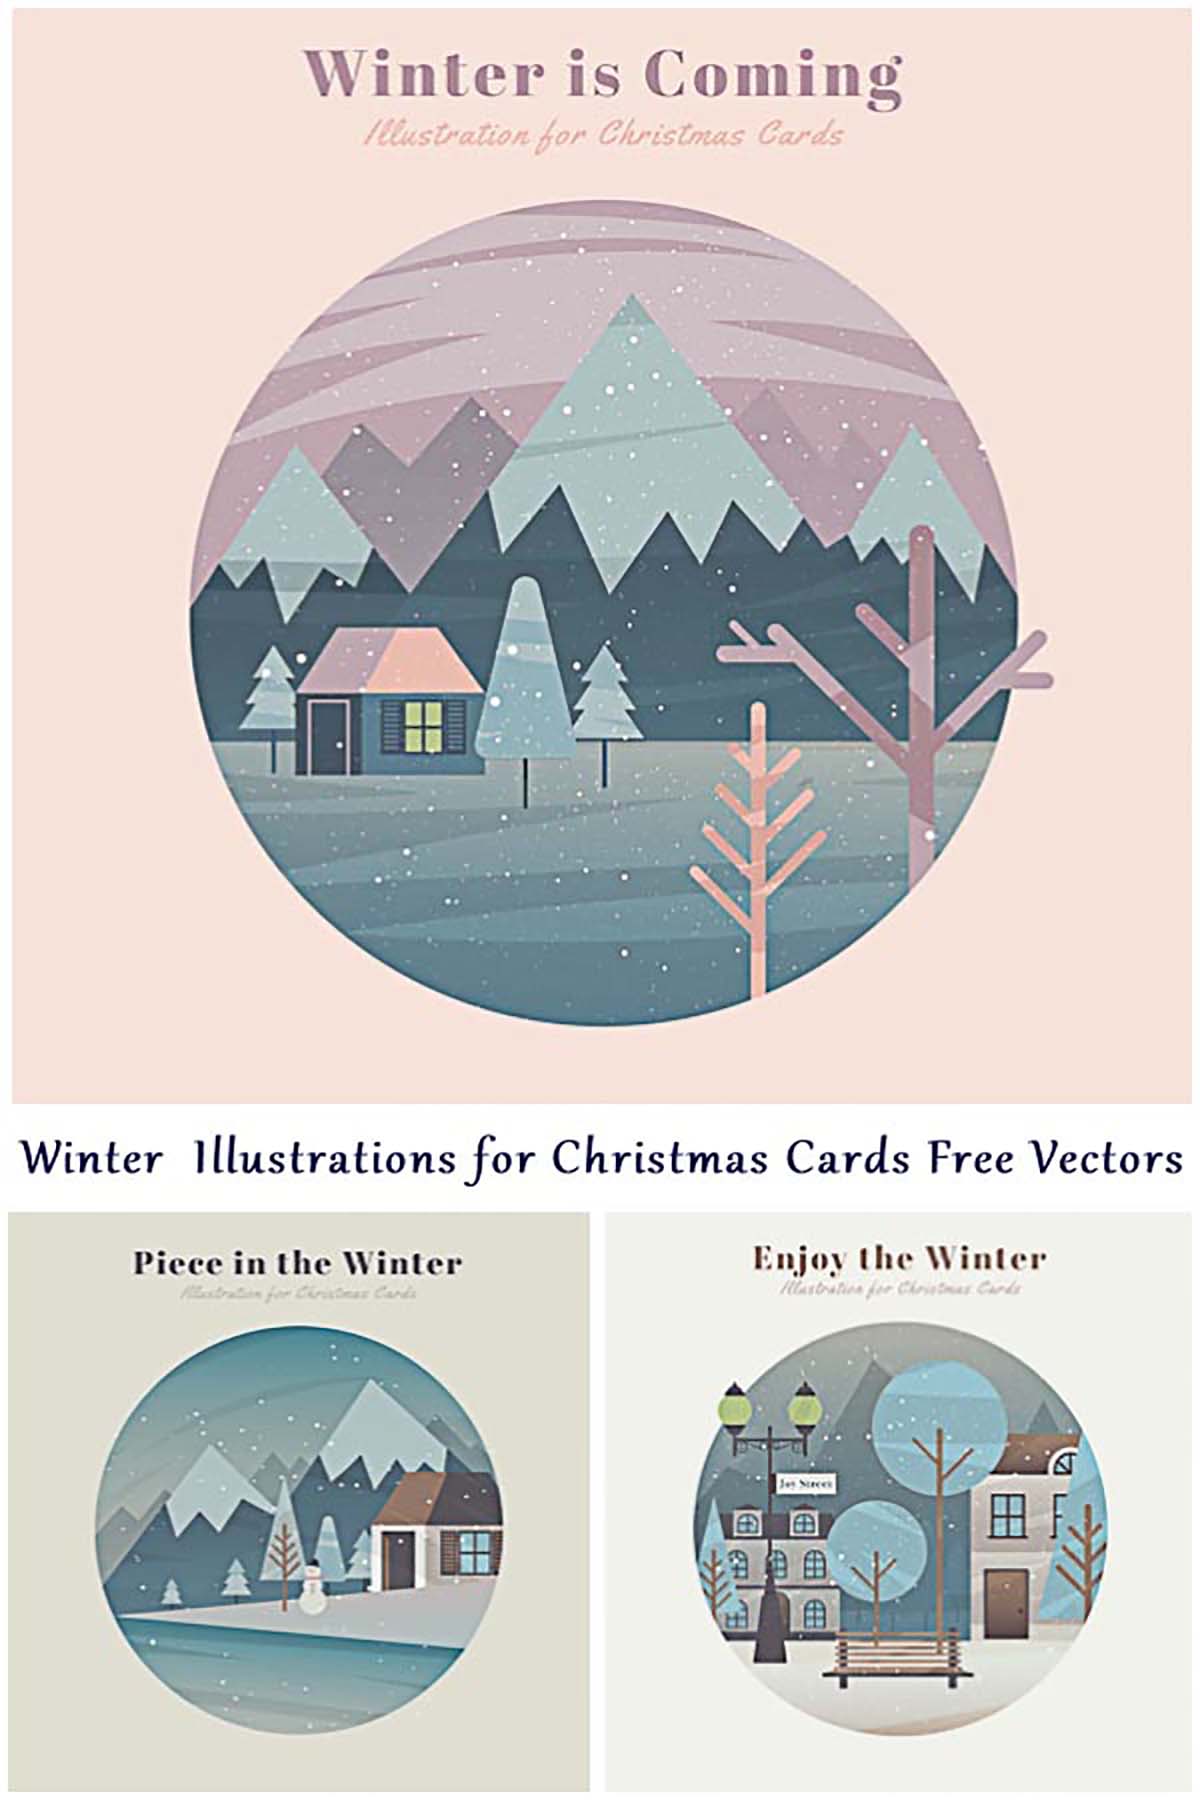 Lovely winter illustrations free vector set